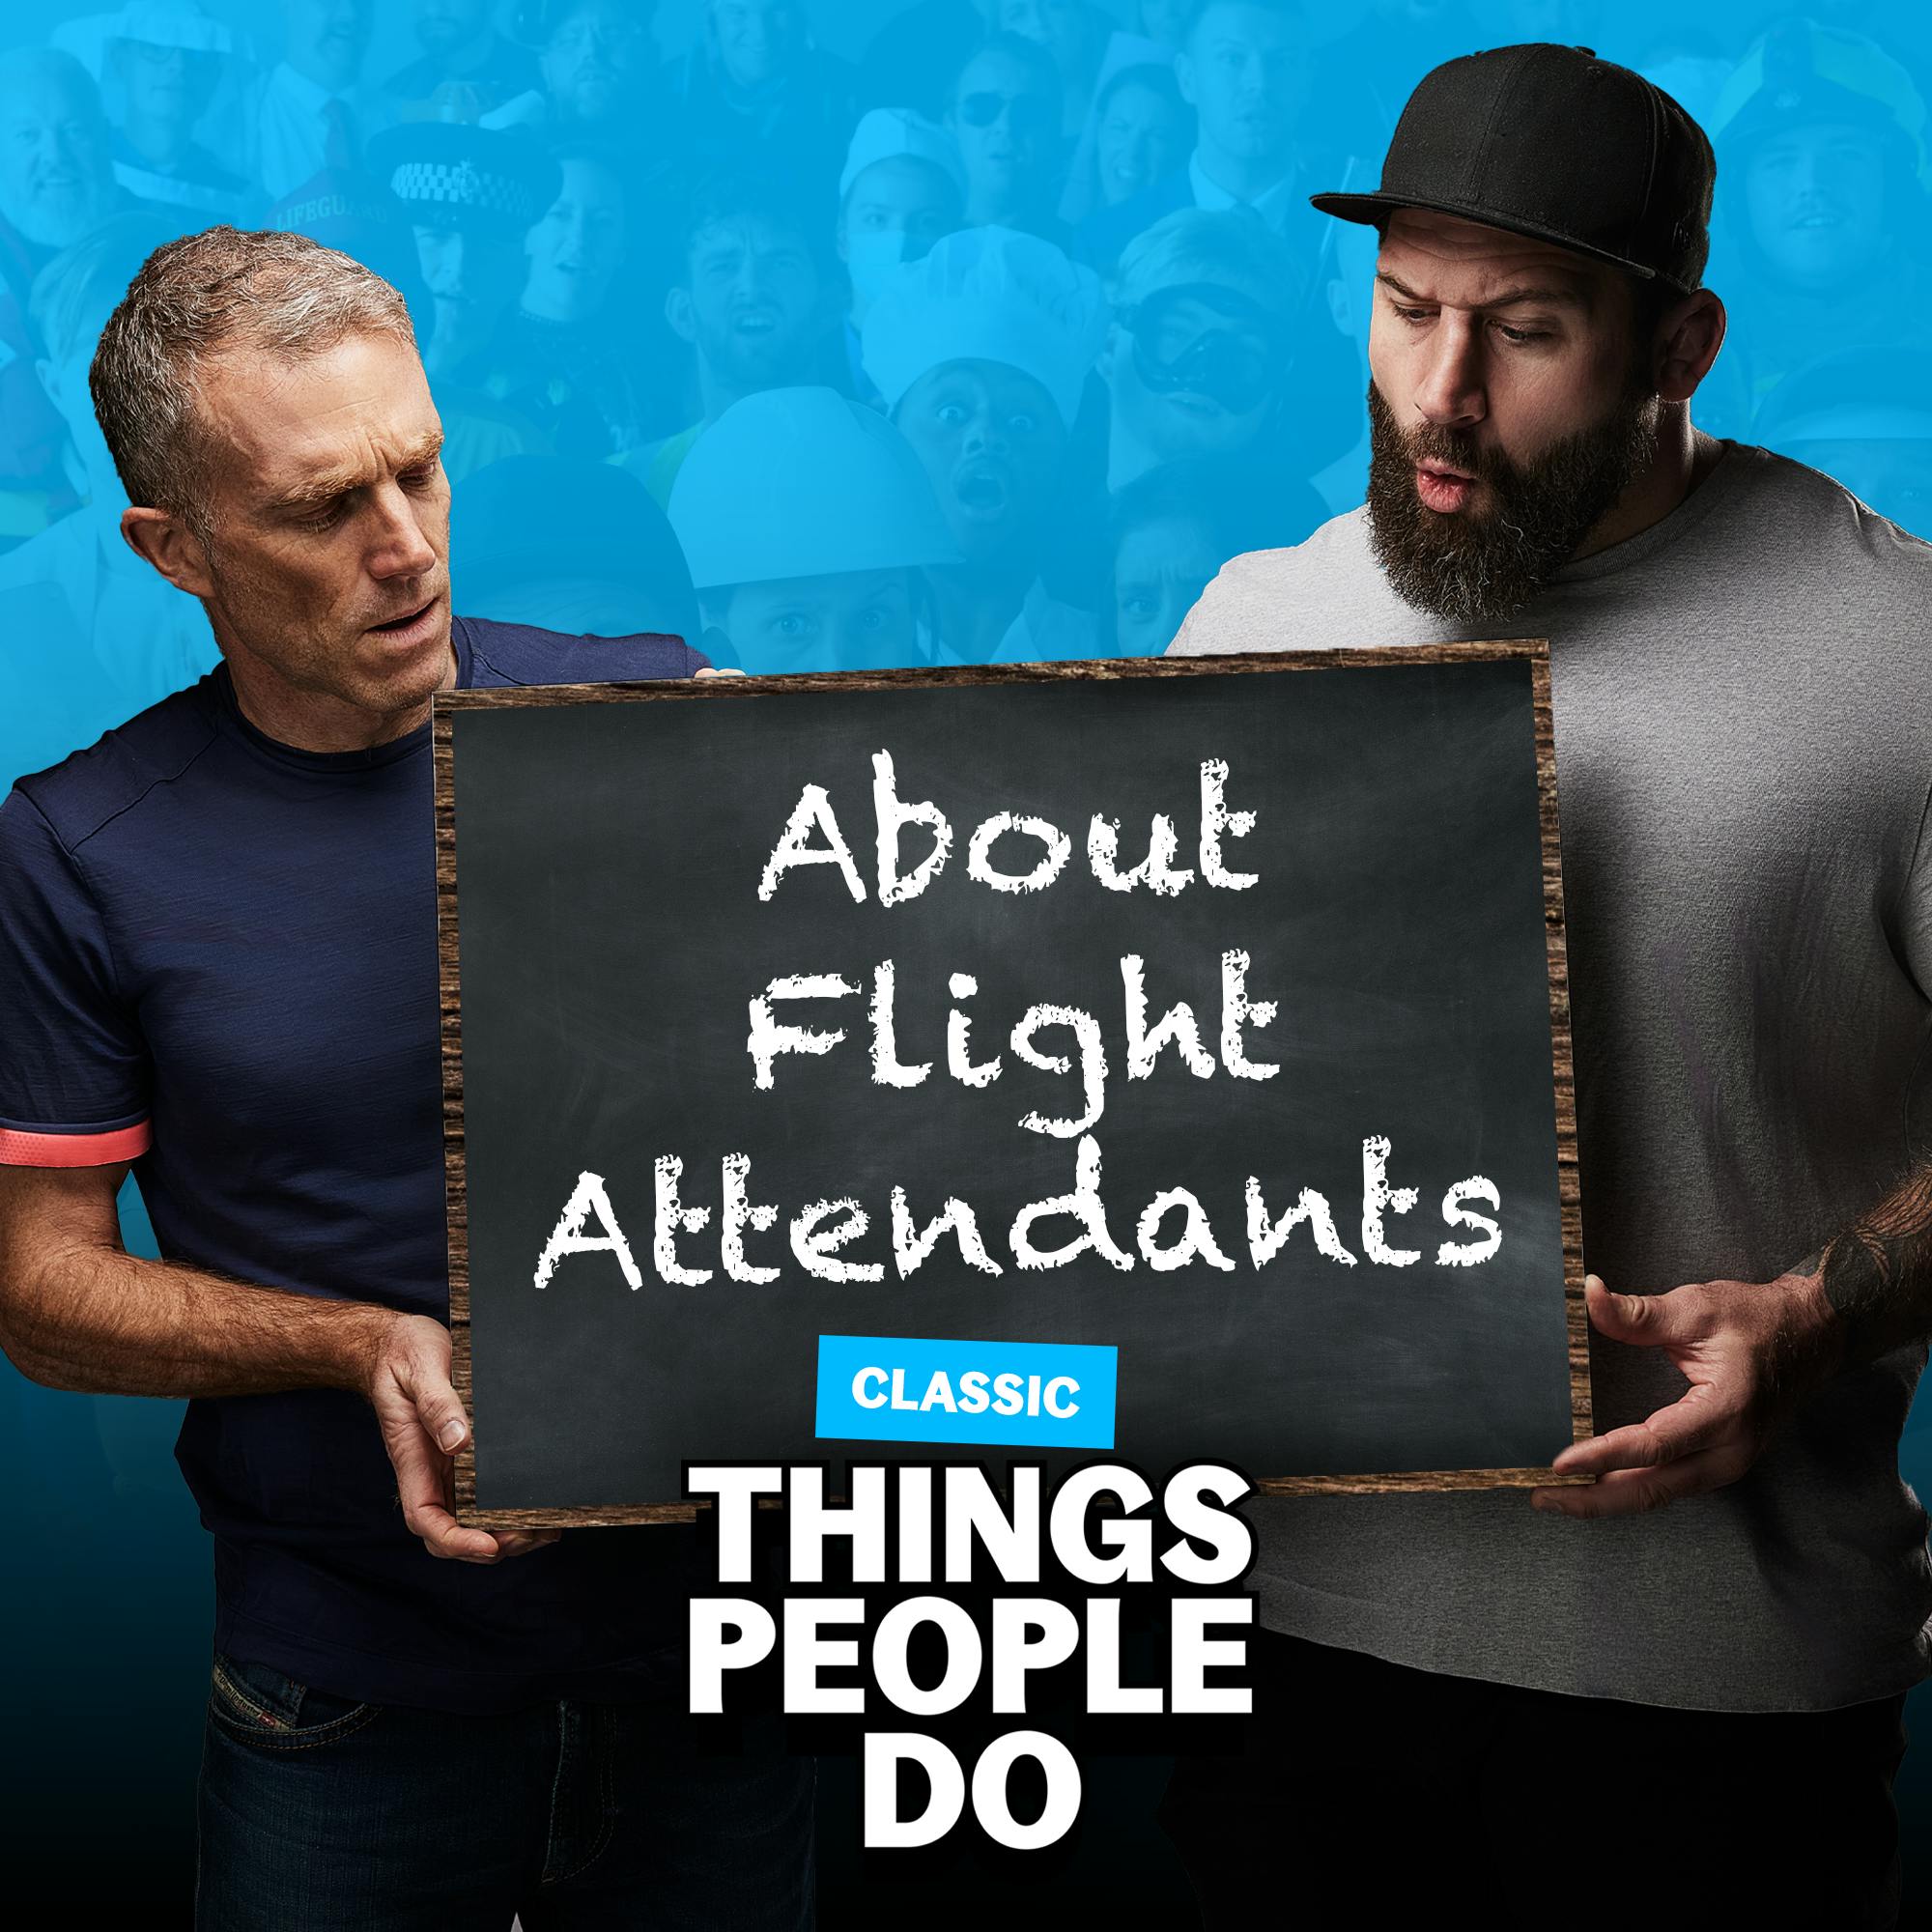 Classic: About Flight Attendants